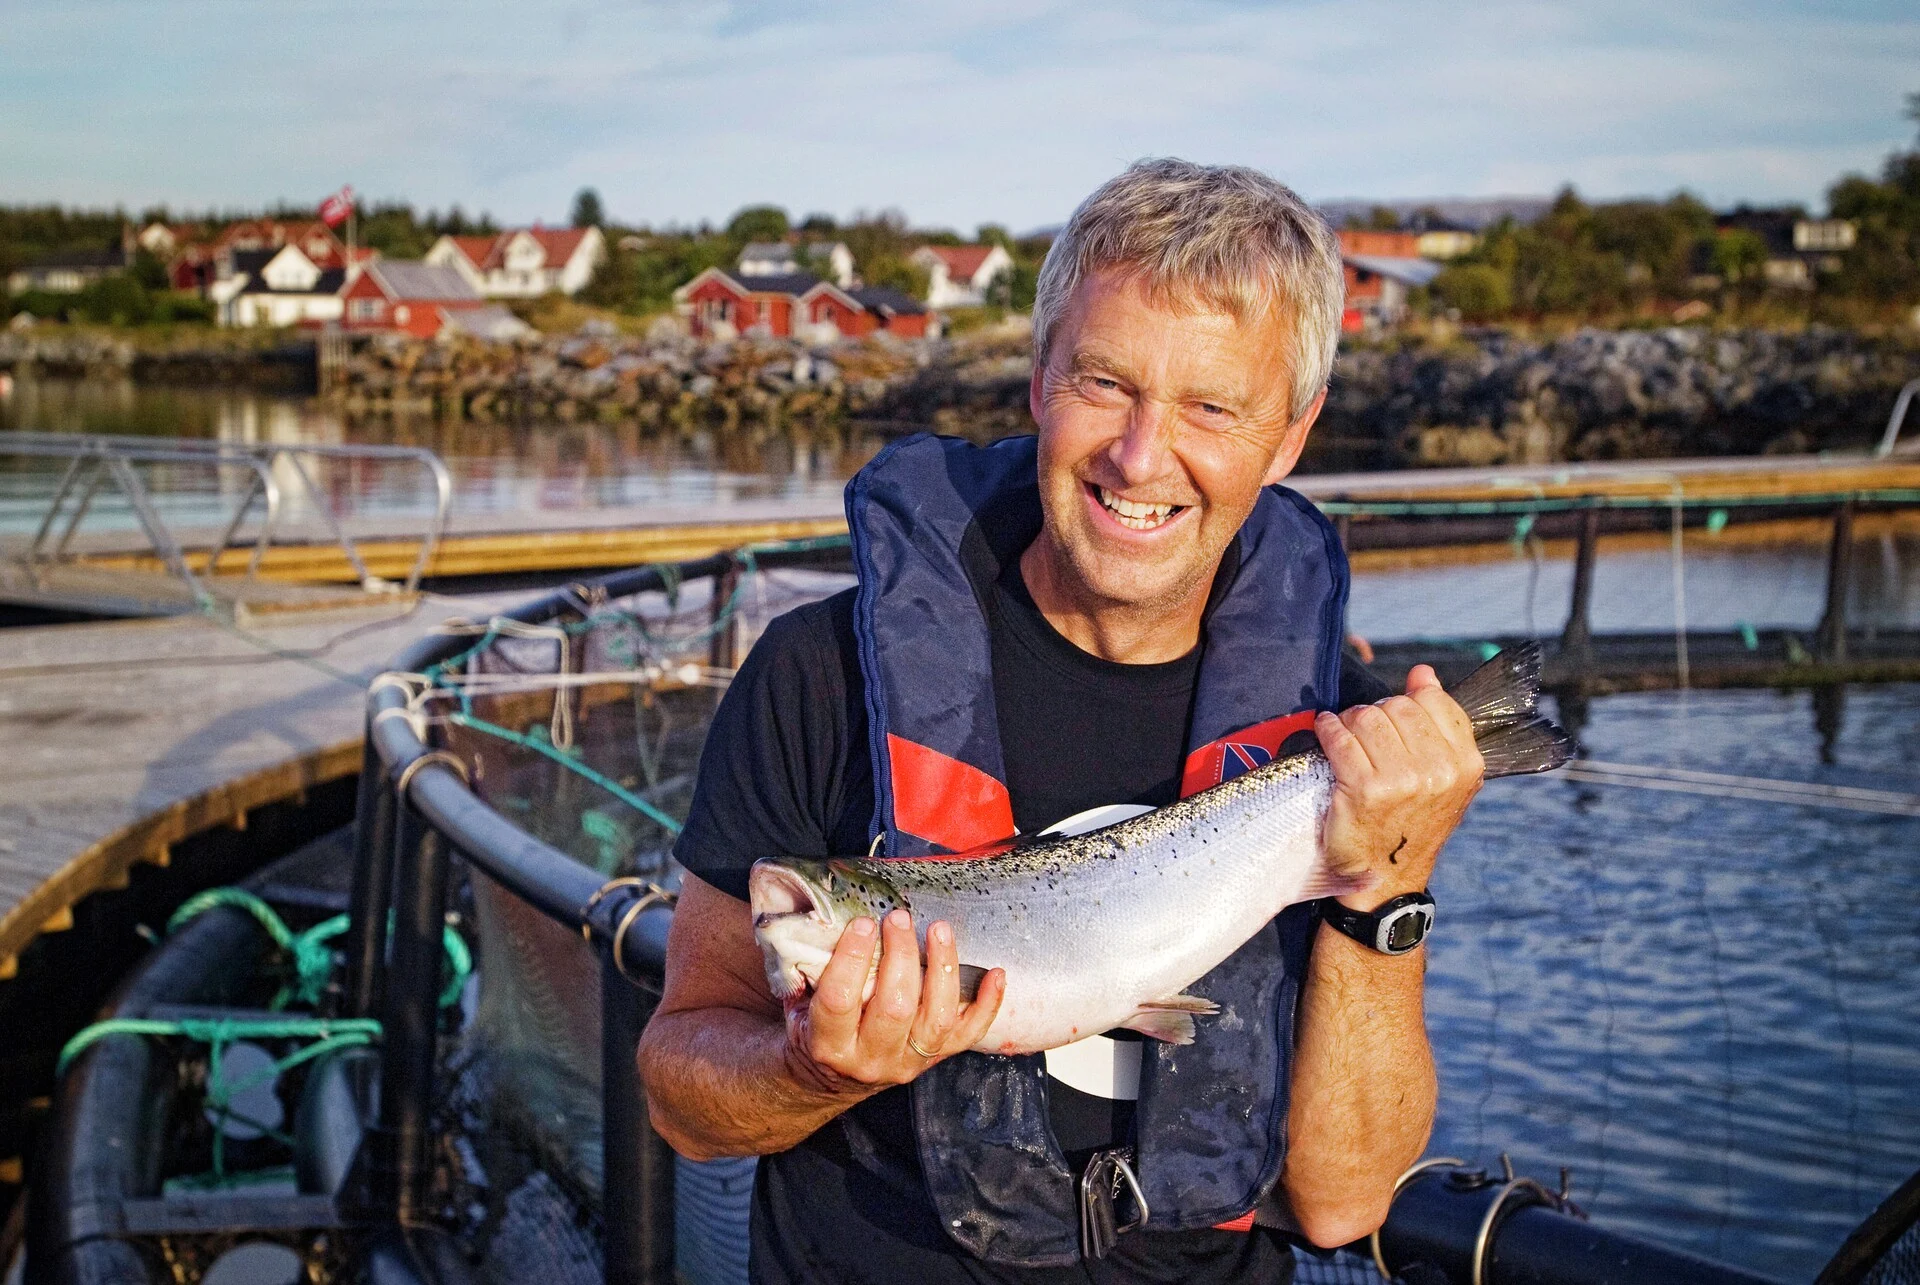 Visit the Salmon, Norway Cruise Excursion